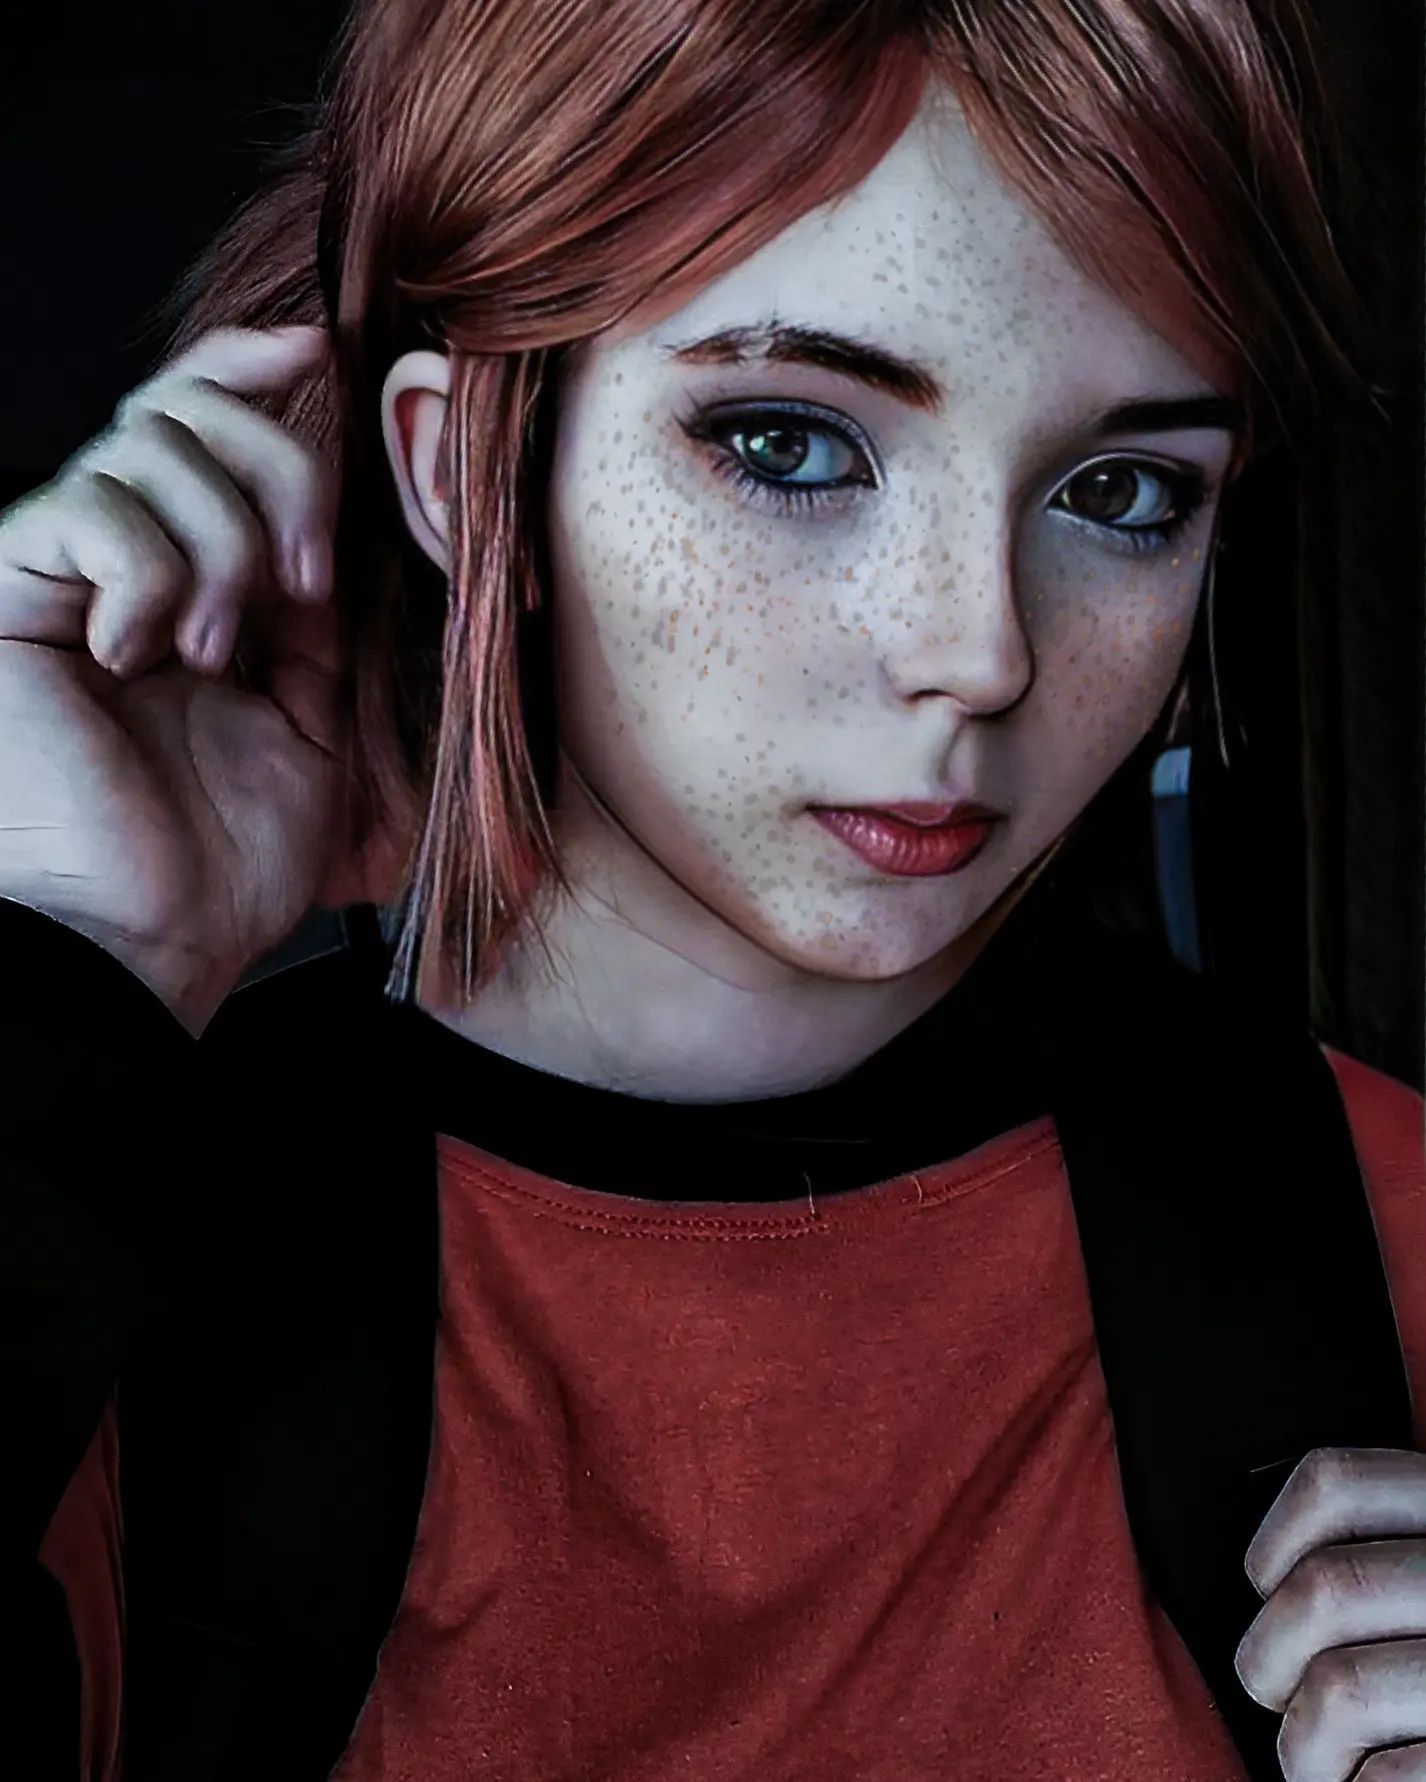 Belo cosplay da Ellie, de The Last of Us, da Cos Lua - 02